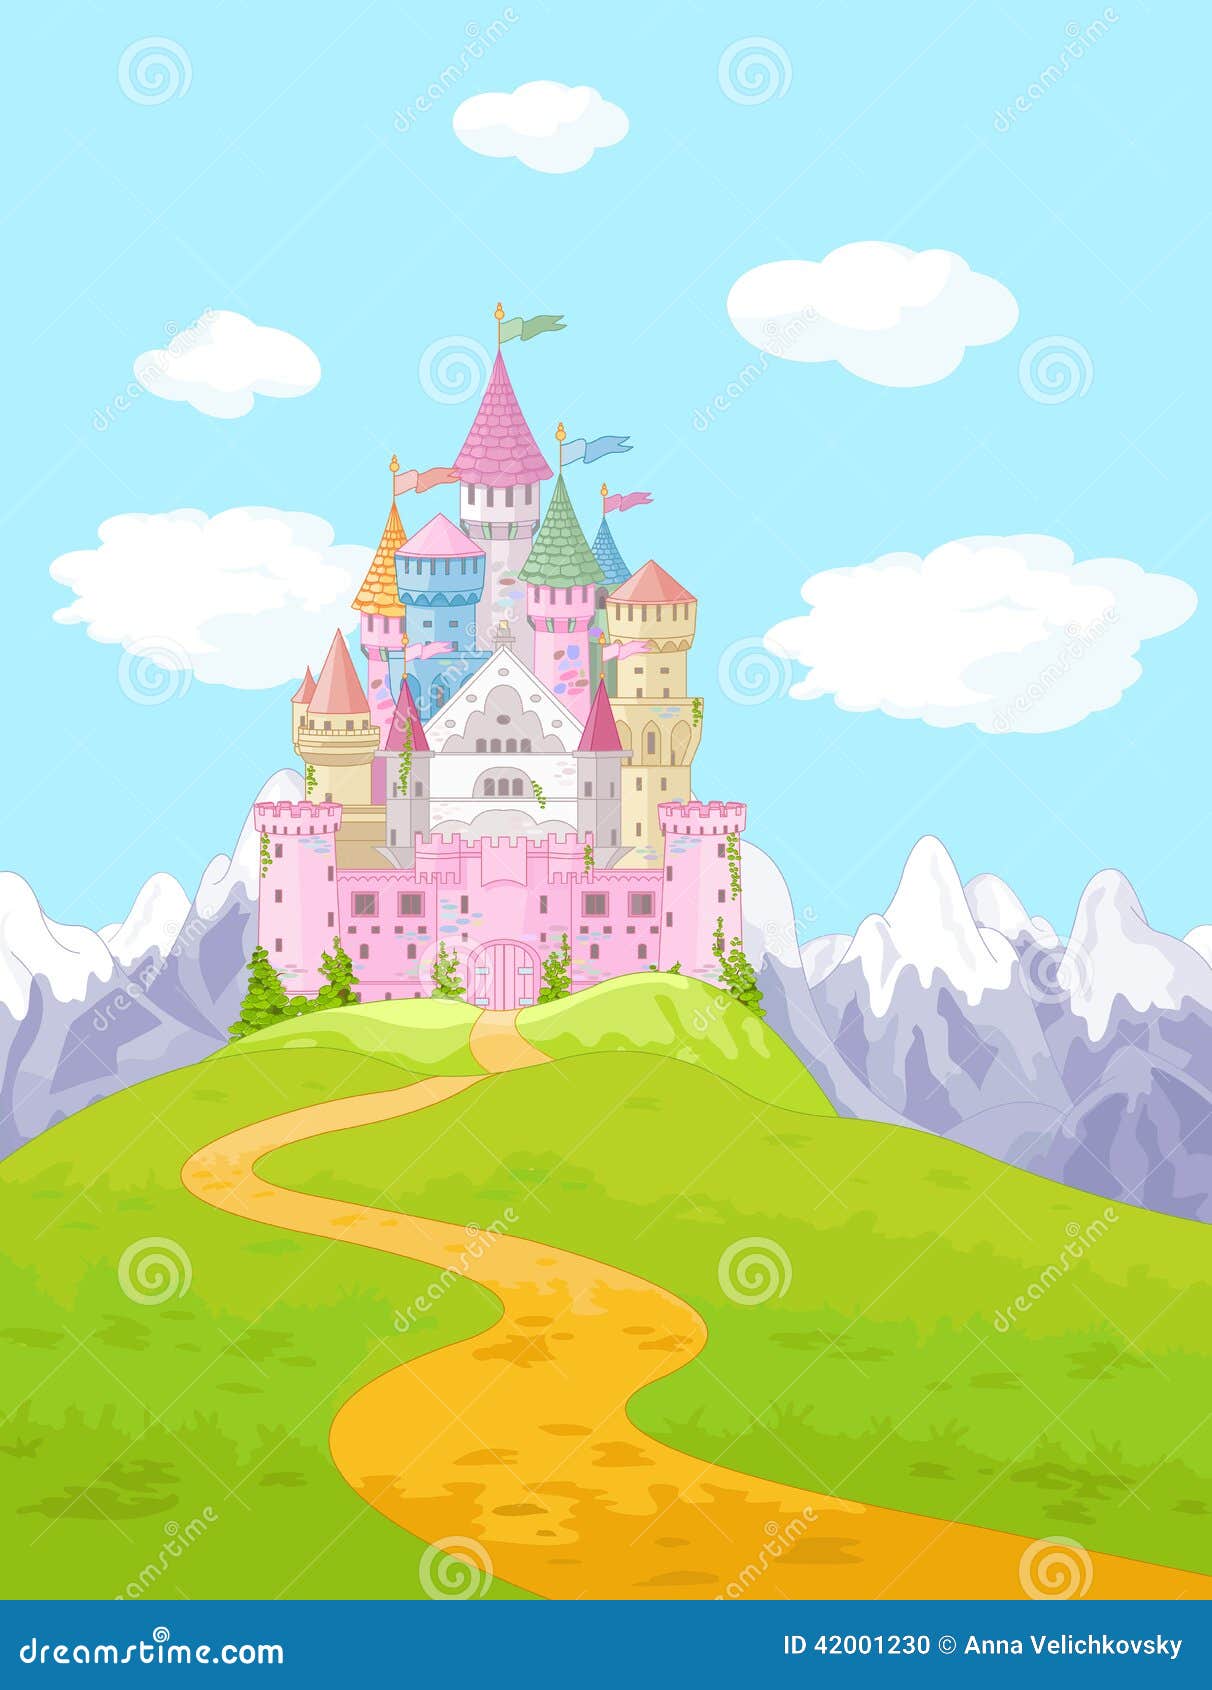 fairy tale castle landscape